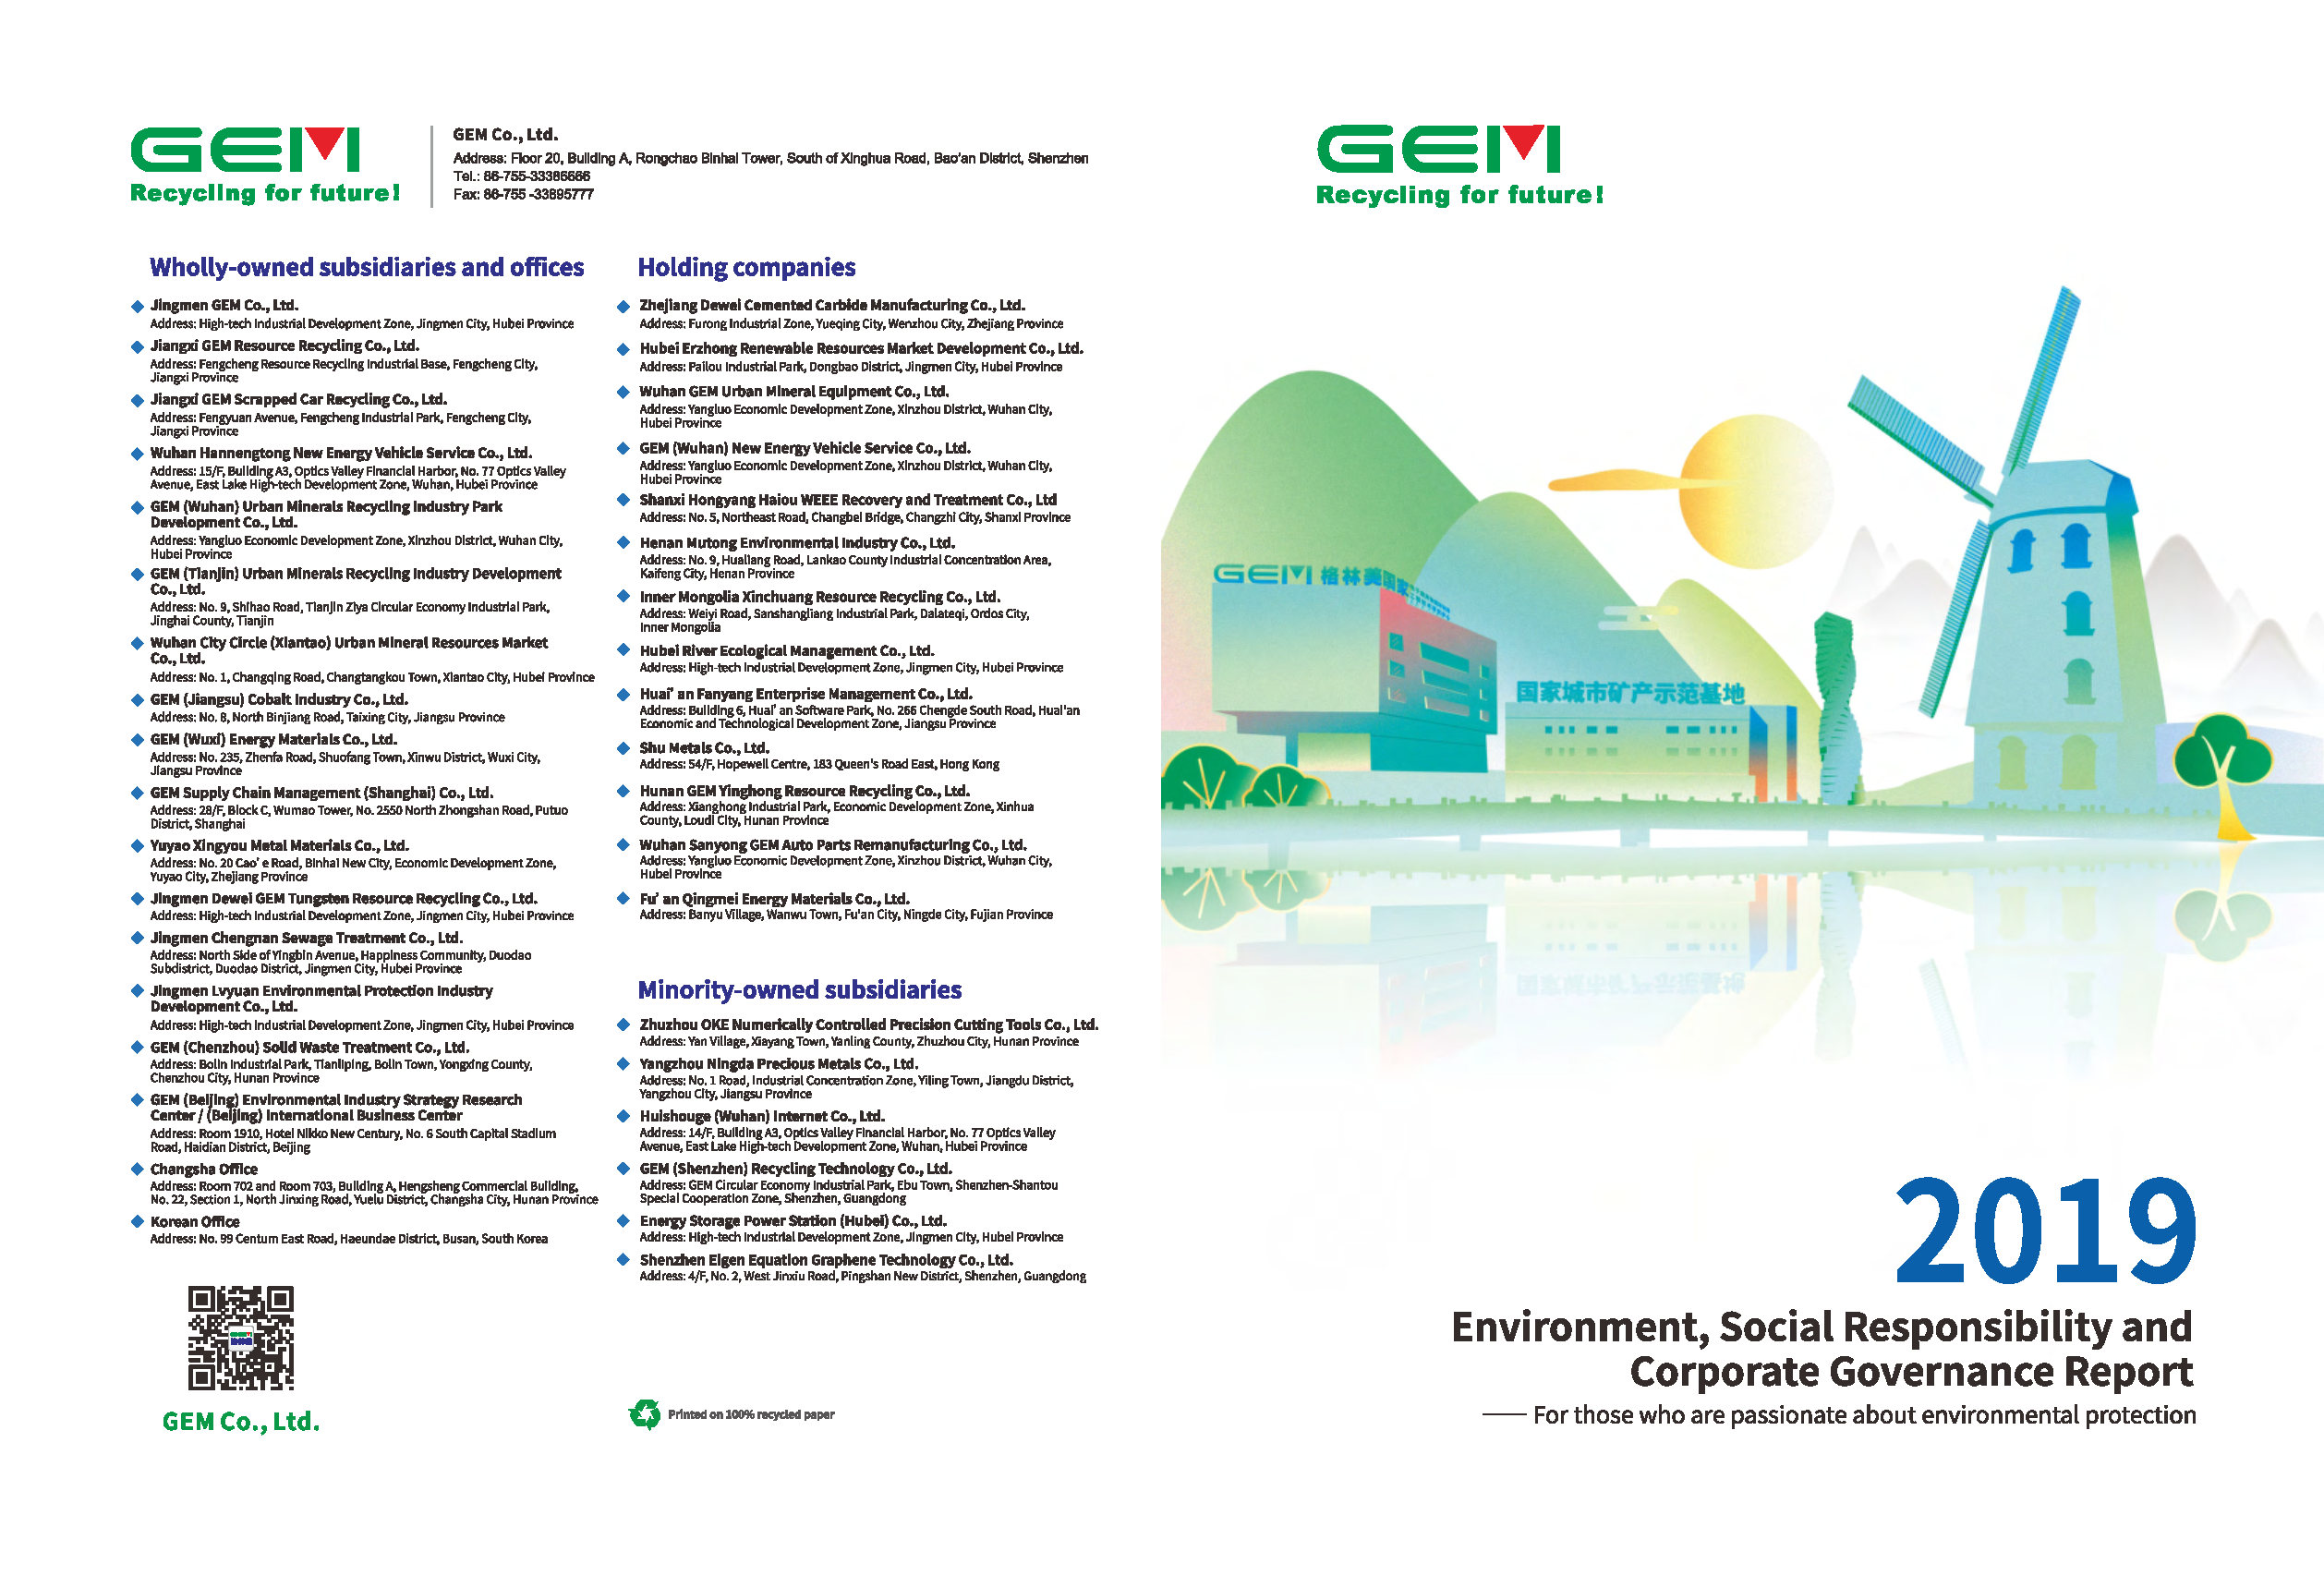 GEM Environment, Social Responsibility and Corporate Governance Report 2019.jpg